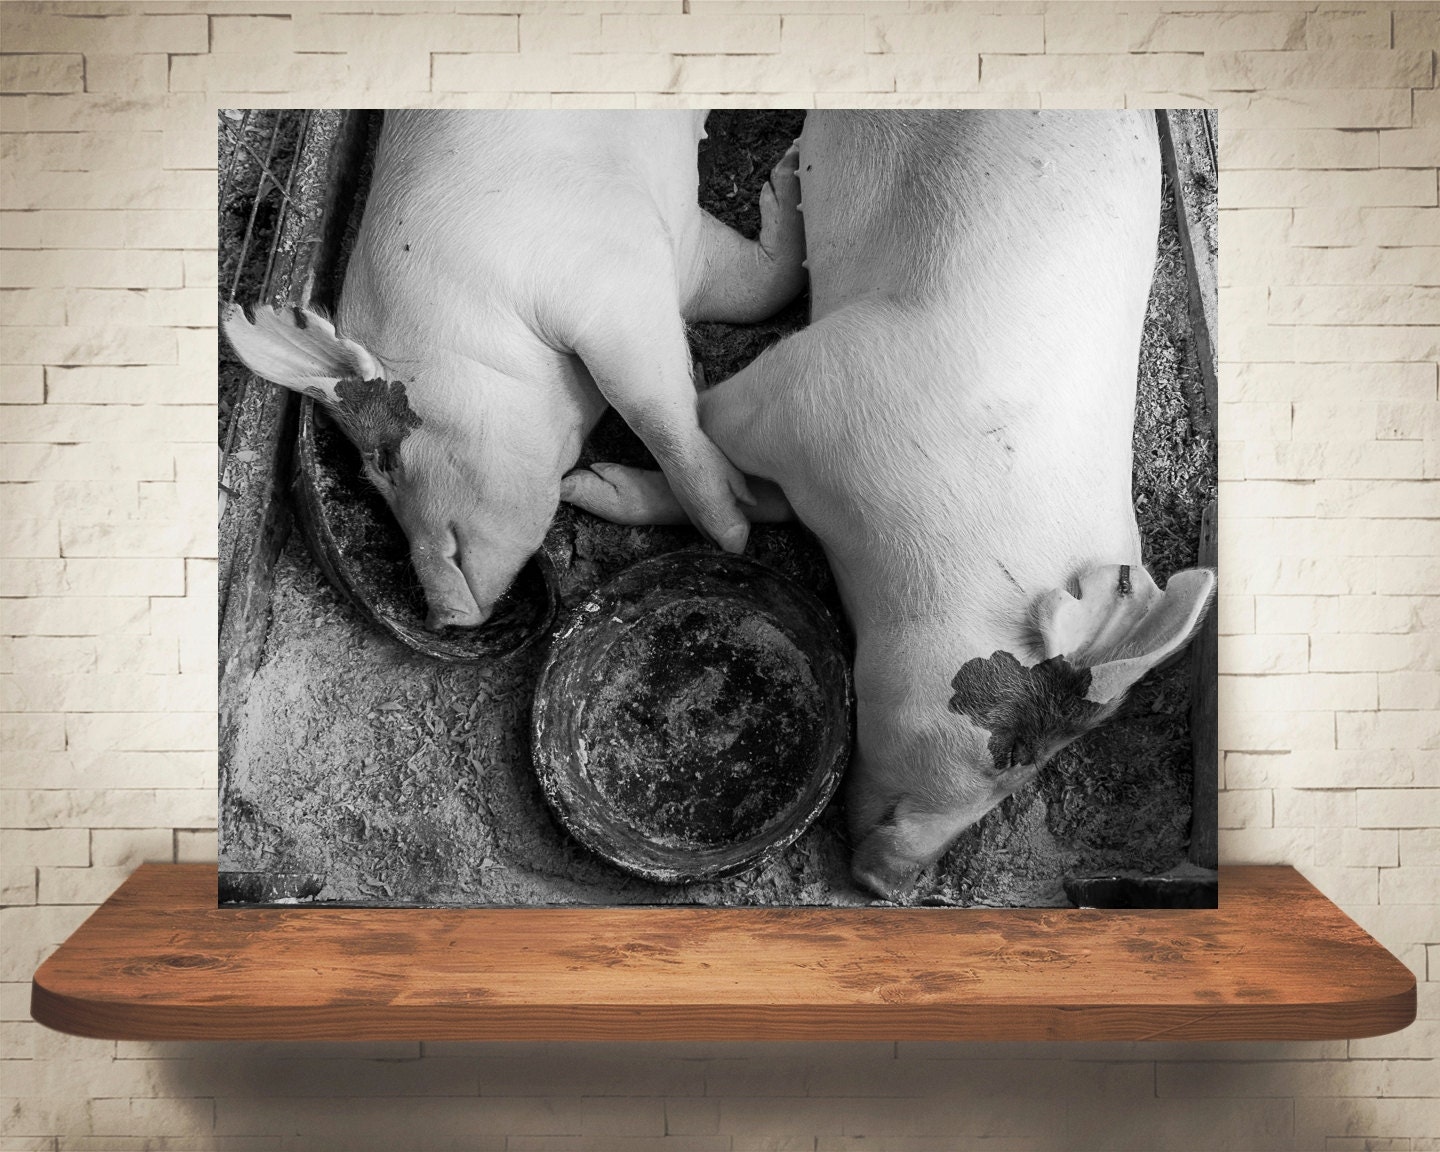 Pictures Pigs Pig Photograph Black White Photography Farmhouse Decor Rustic Fine Art Print Farm Country